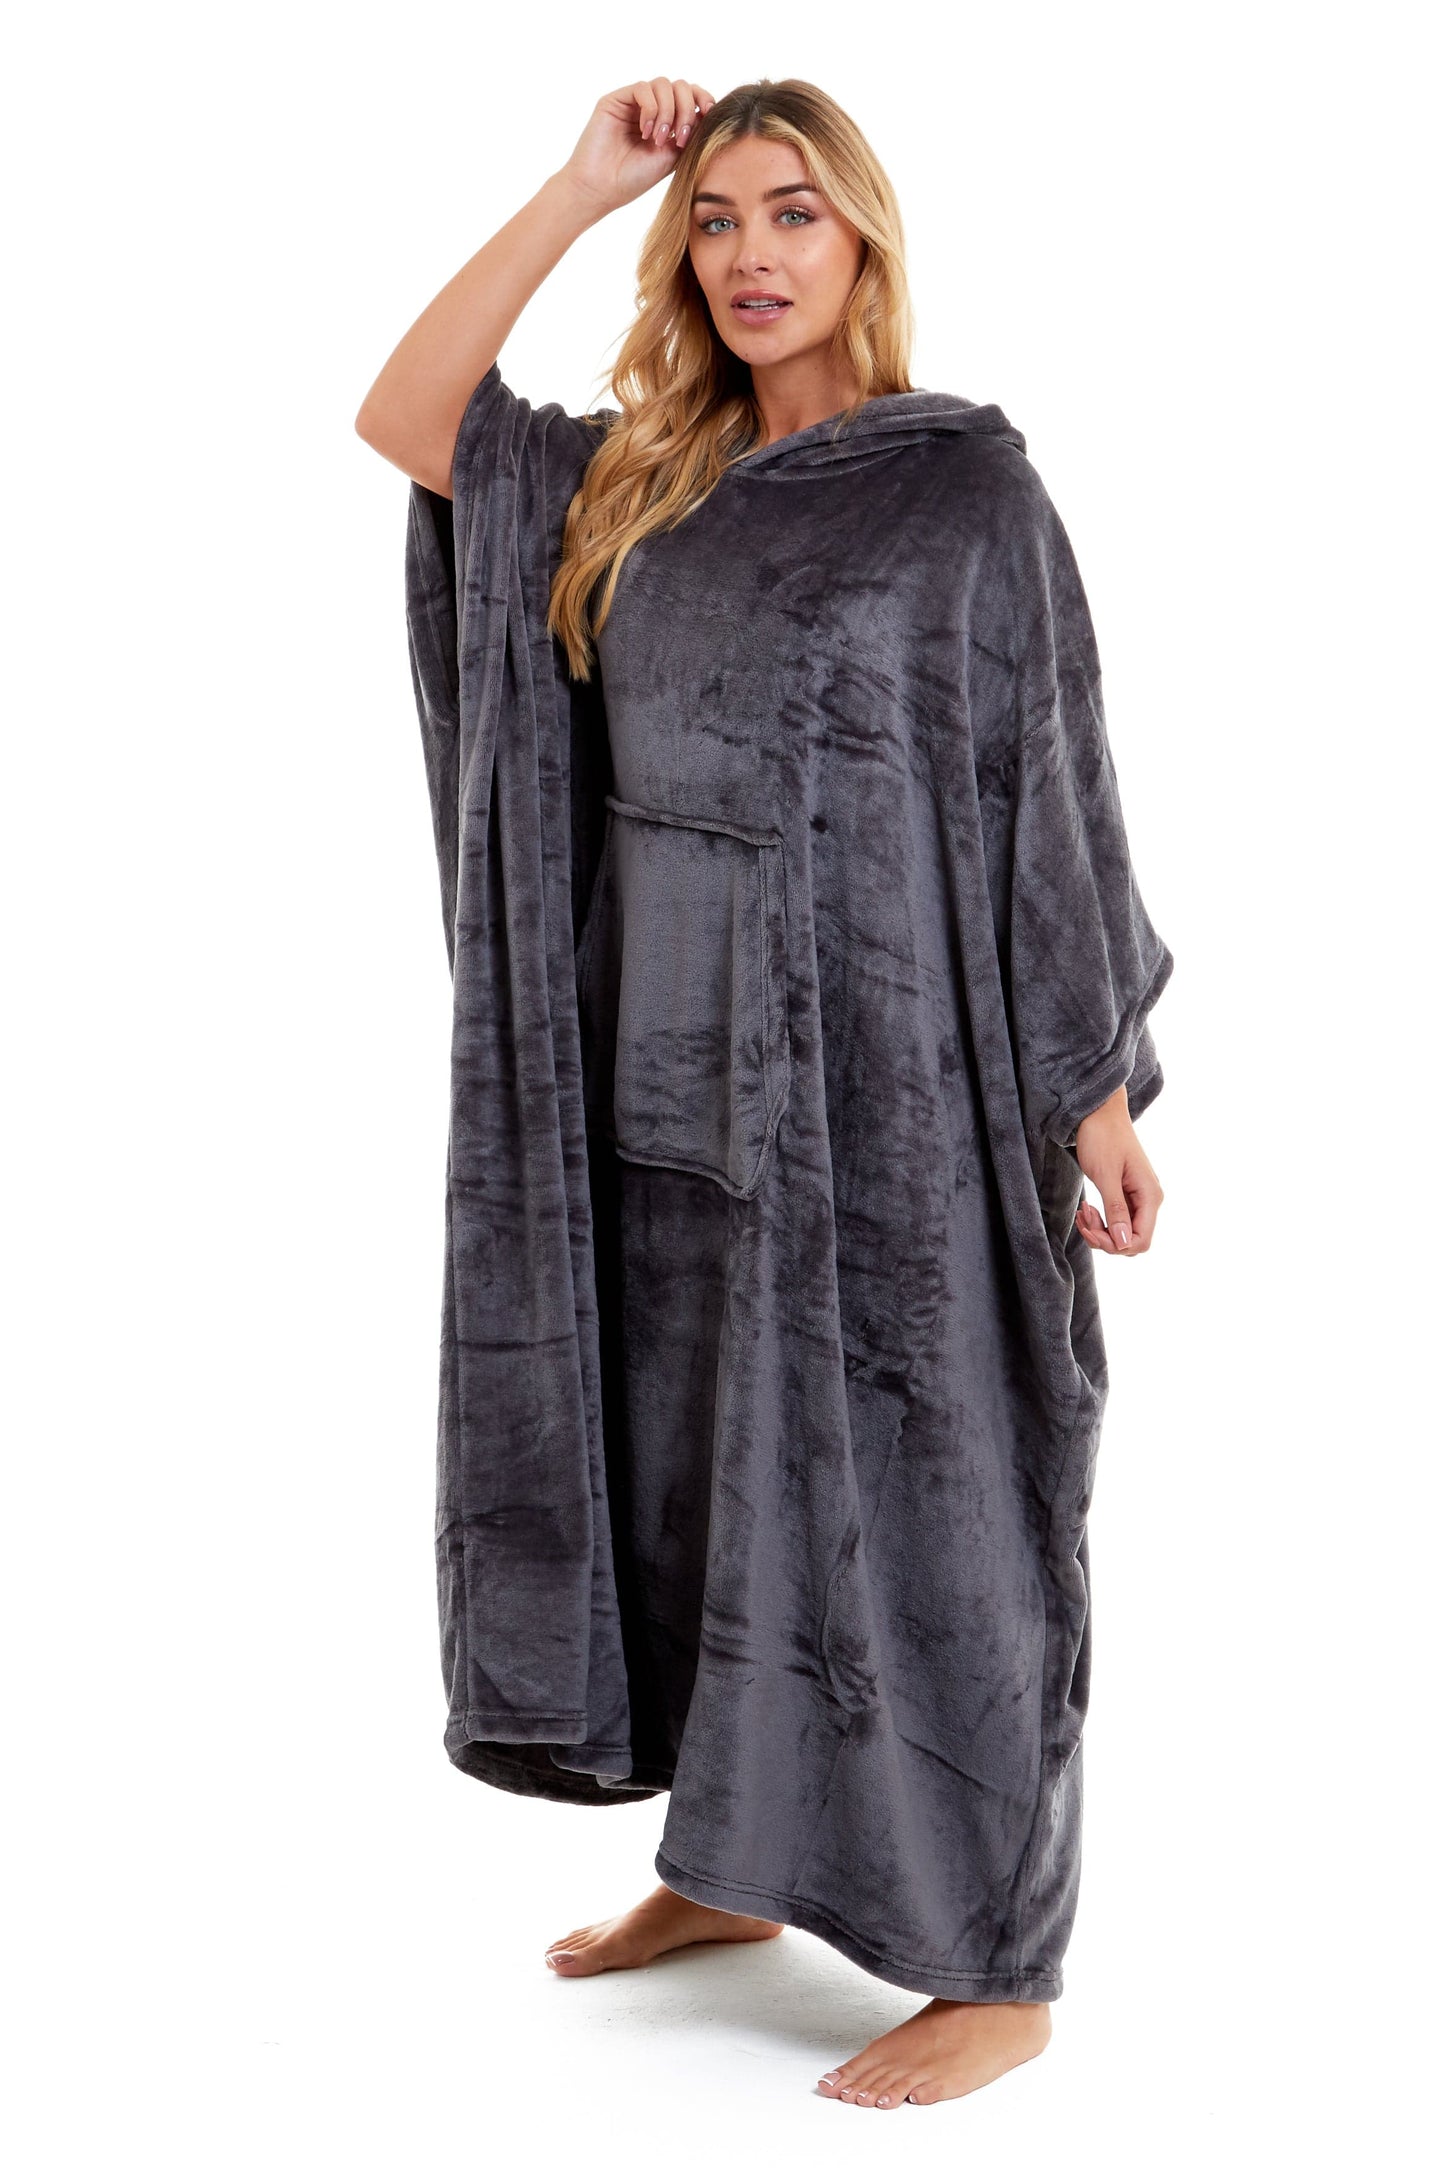 Women's Hooded Poncho Designer Soft Fleece Lounge Wear Blanket Top One Size CHARCOAL Daisy Dreamer Hooded Blanket